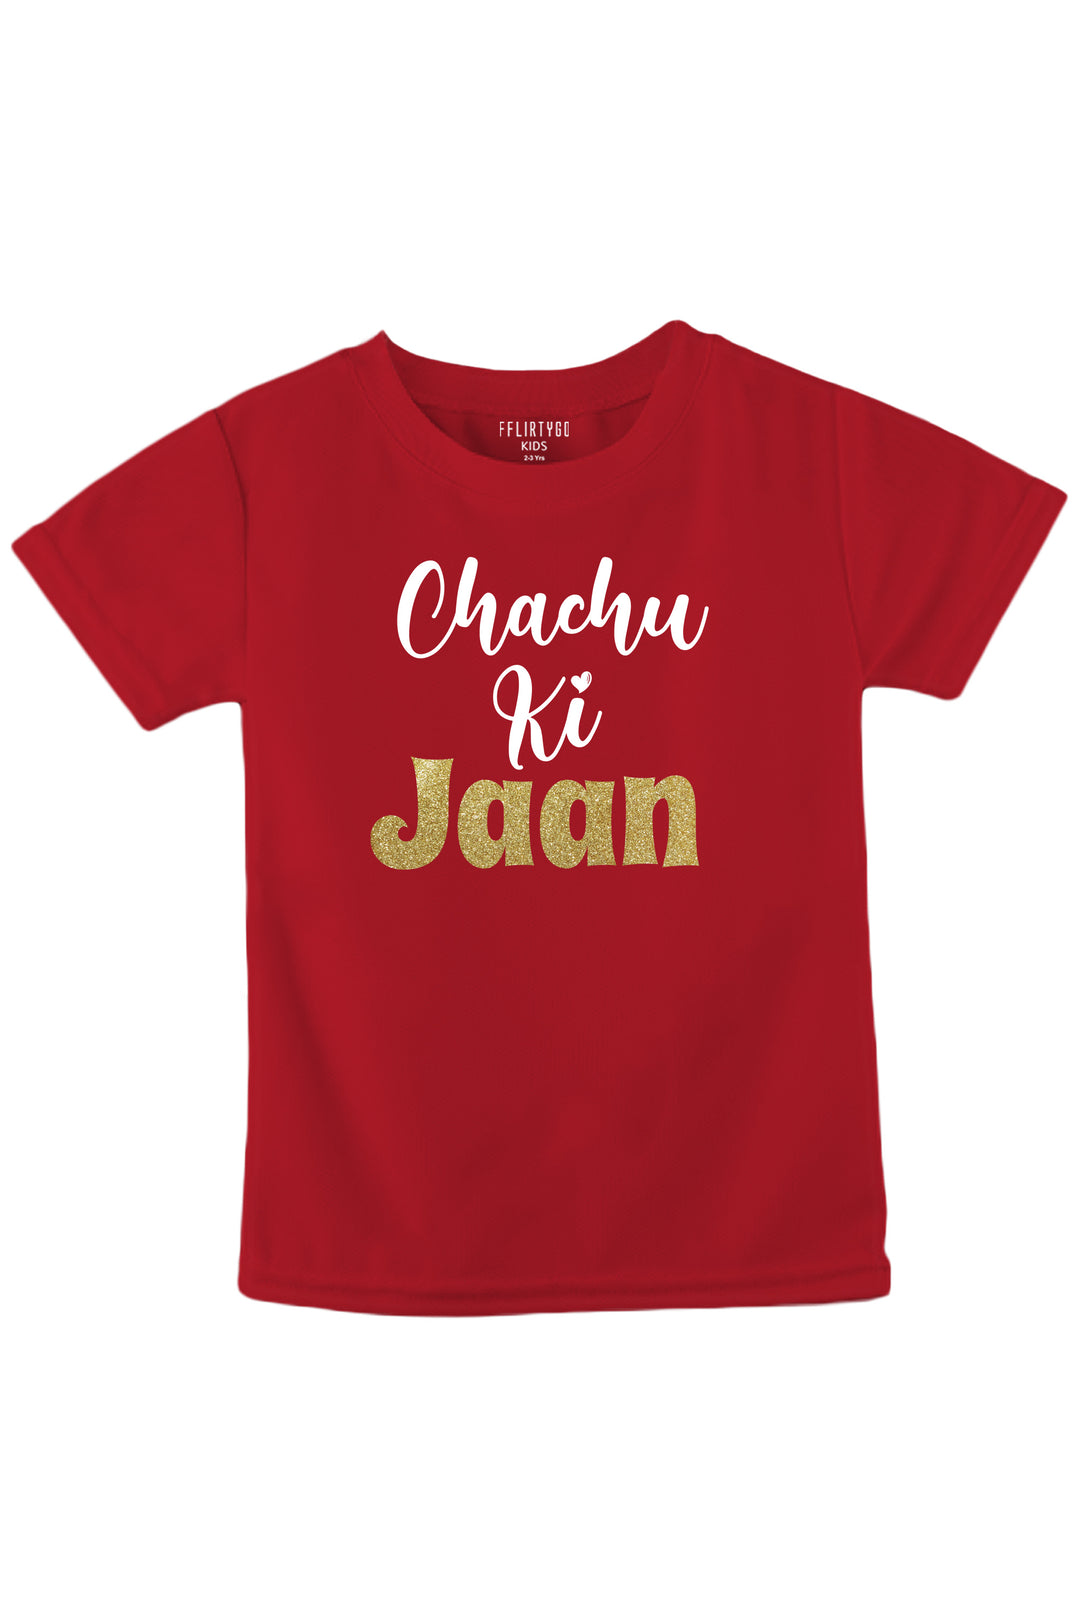 Chachu Ki Jaan